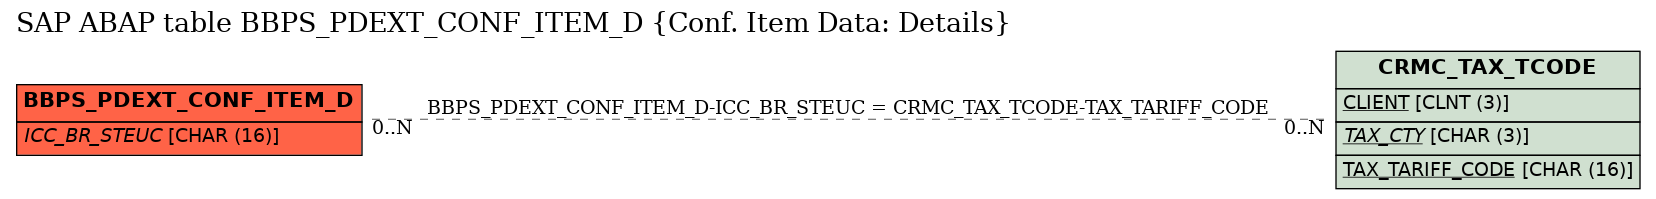 E-R Diagram for table BBPS_PDEXT_CONF_ITEM_D (Conf. Item Data: Details)